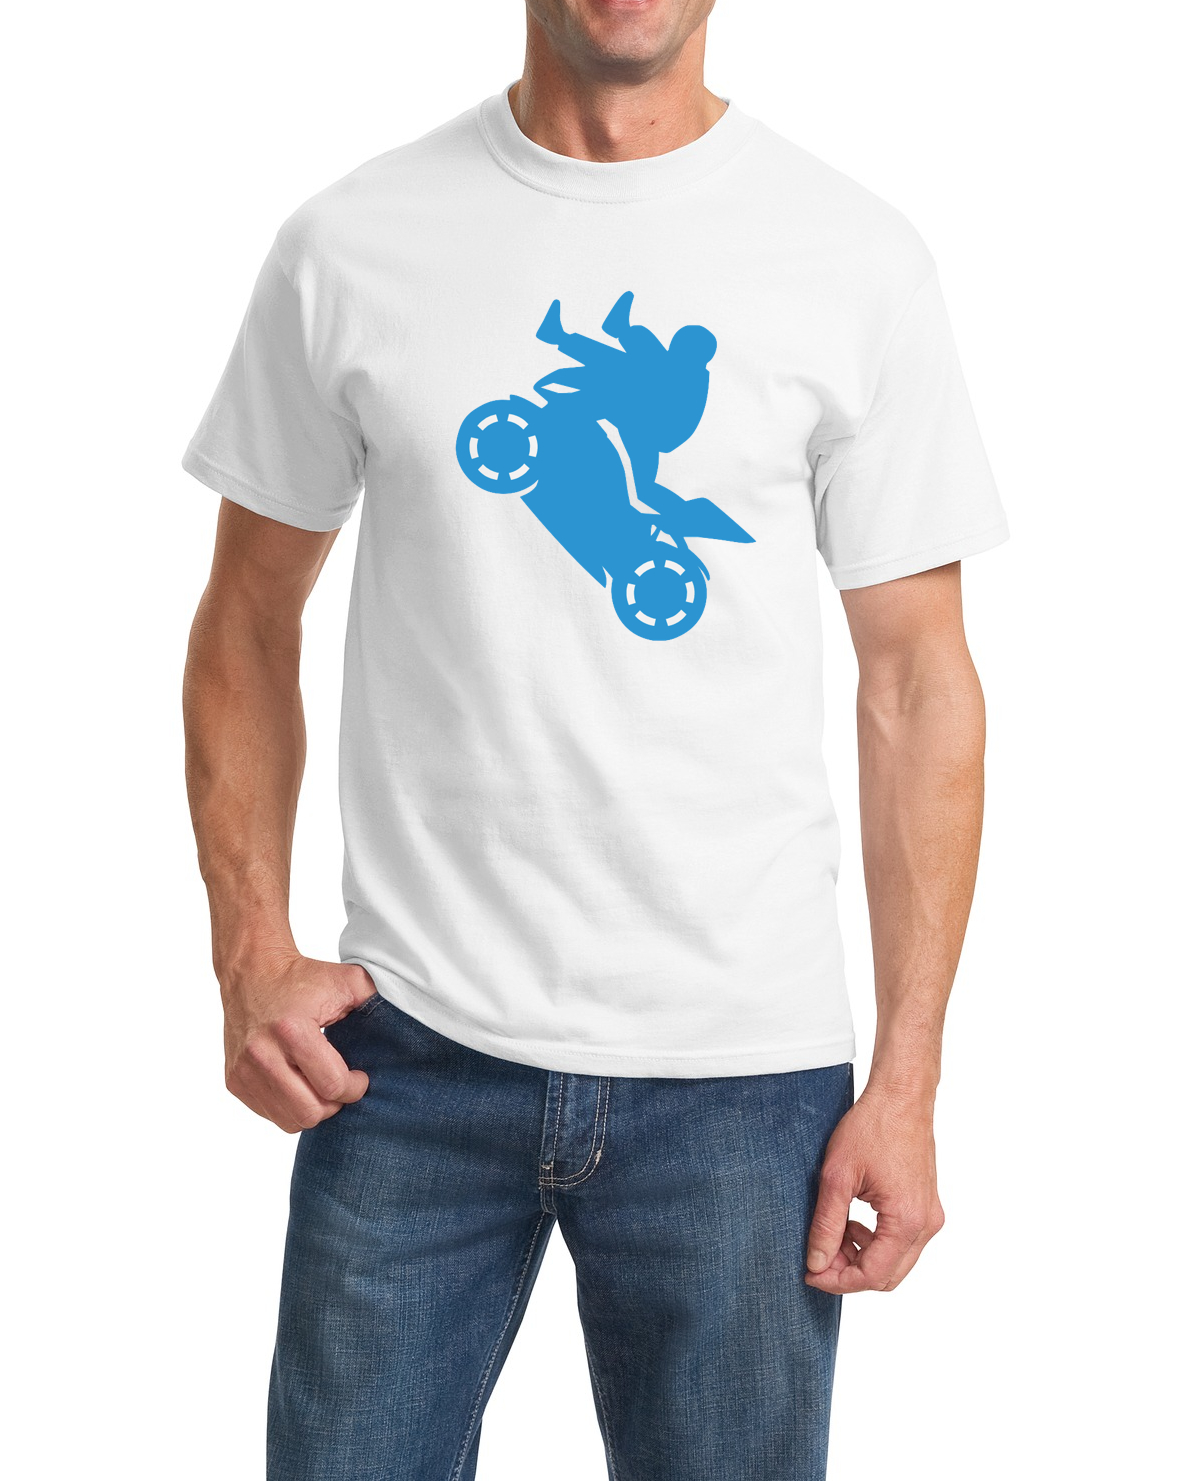 T-shirt for bike Stunters 